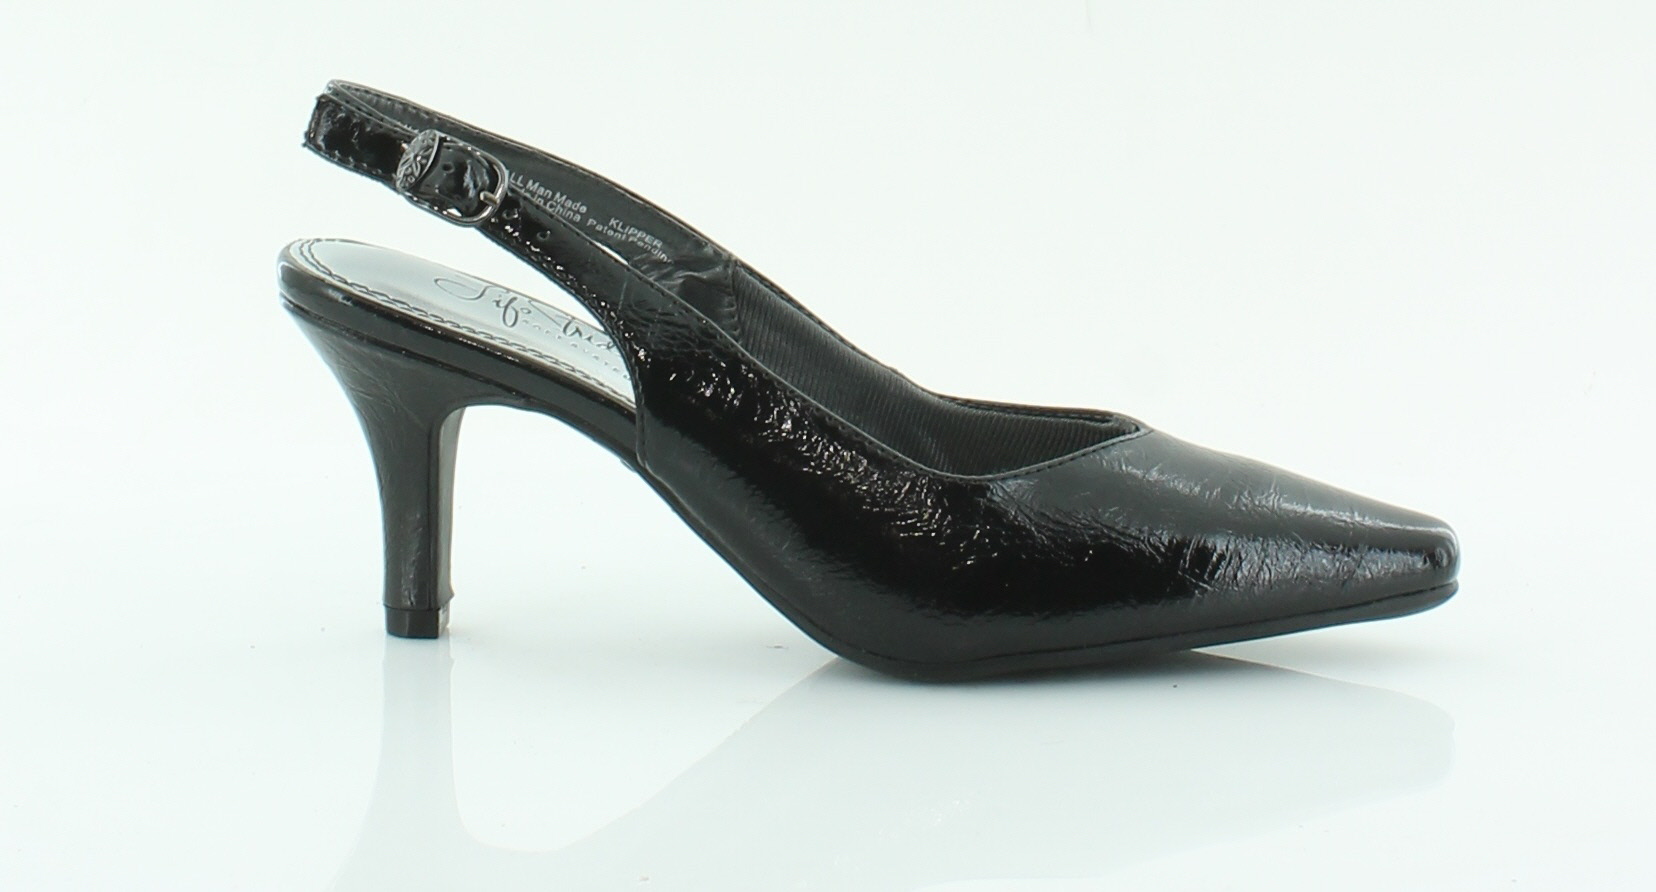 Details about Life Stride New Klipper Black Womens Shoes Size 5.5 M ...